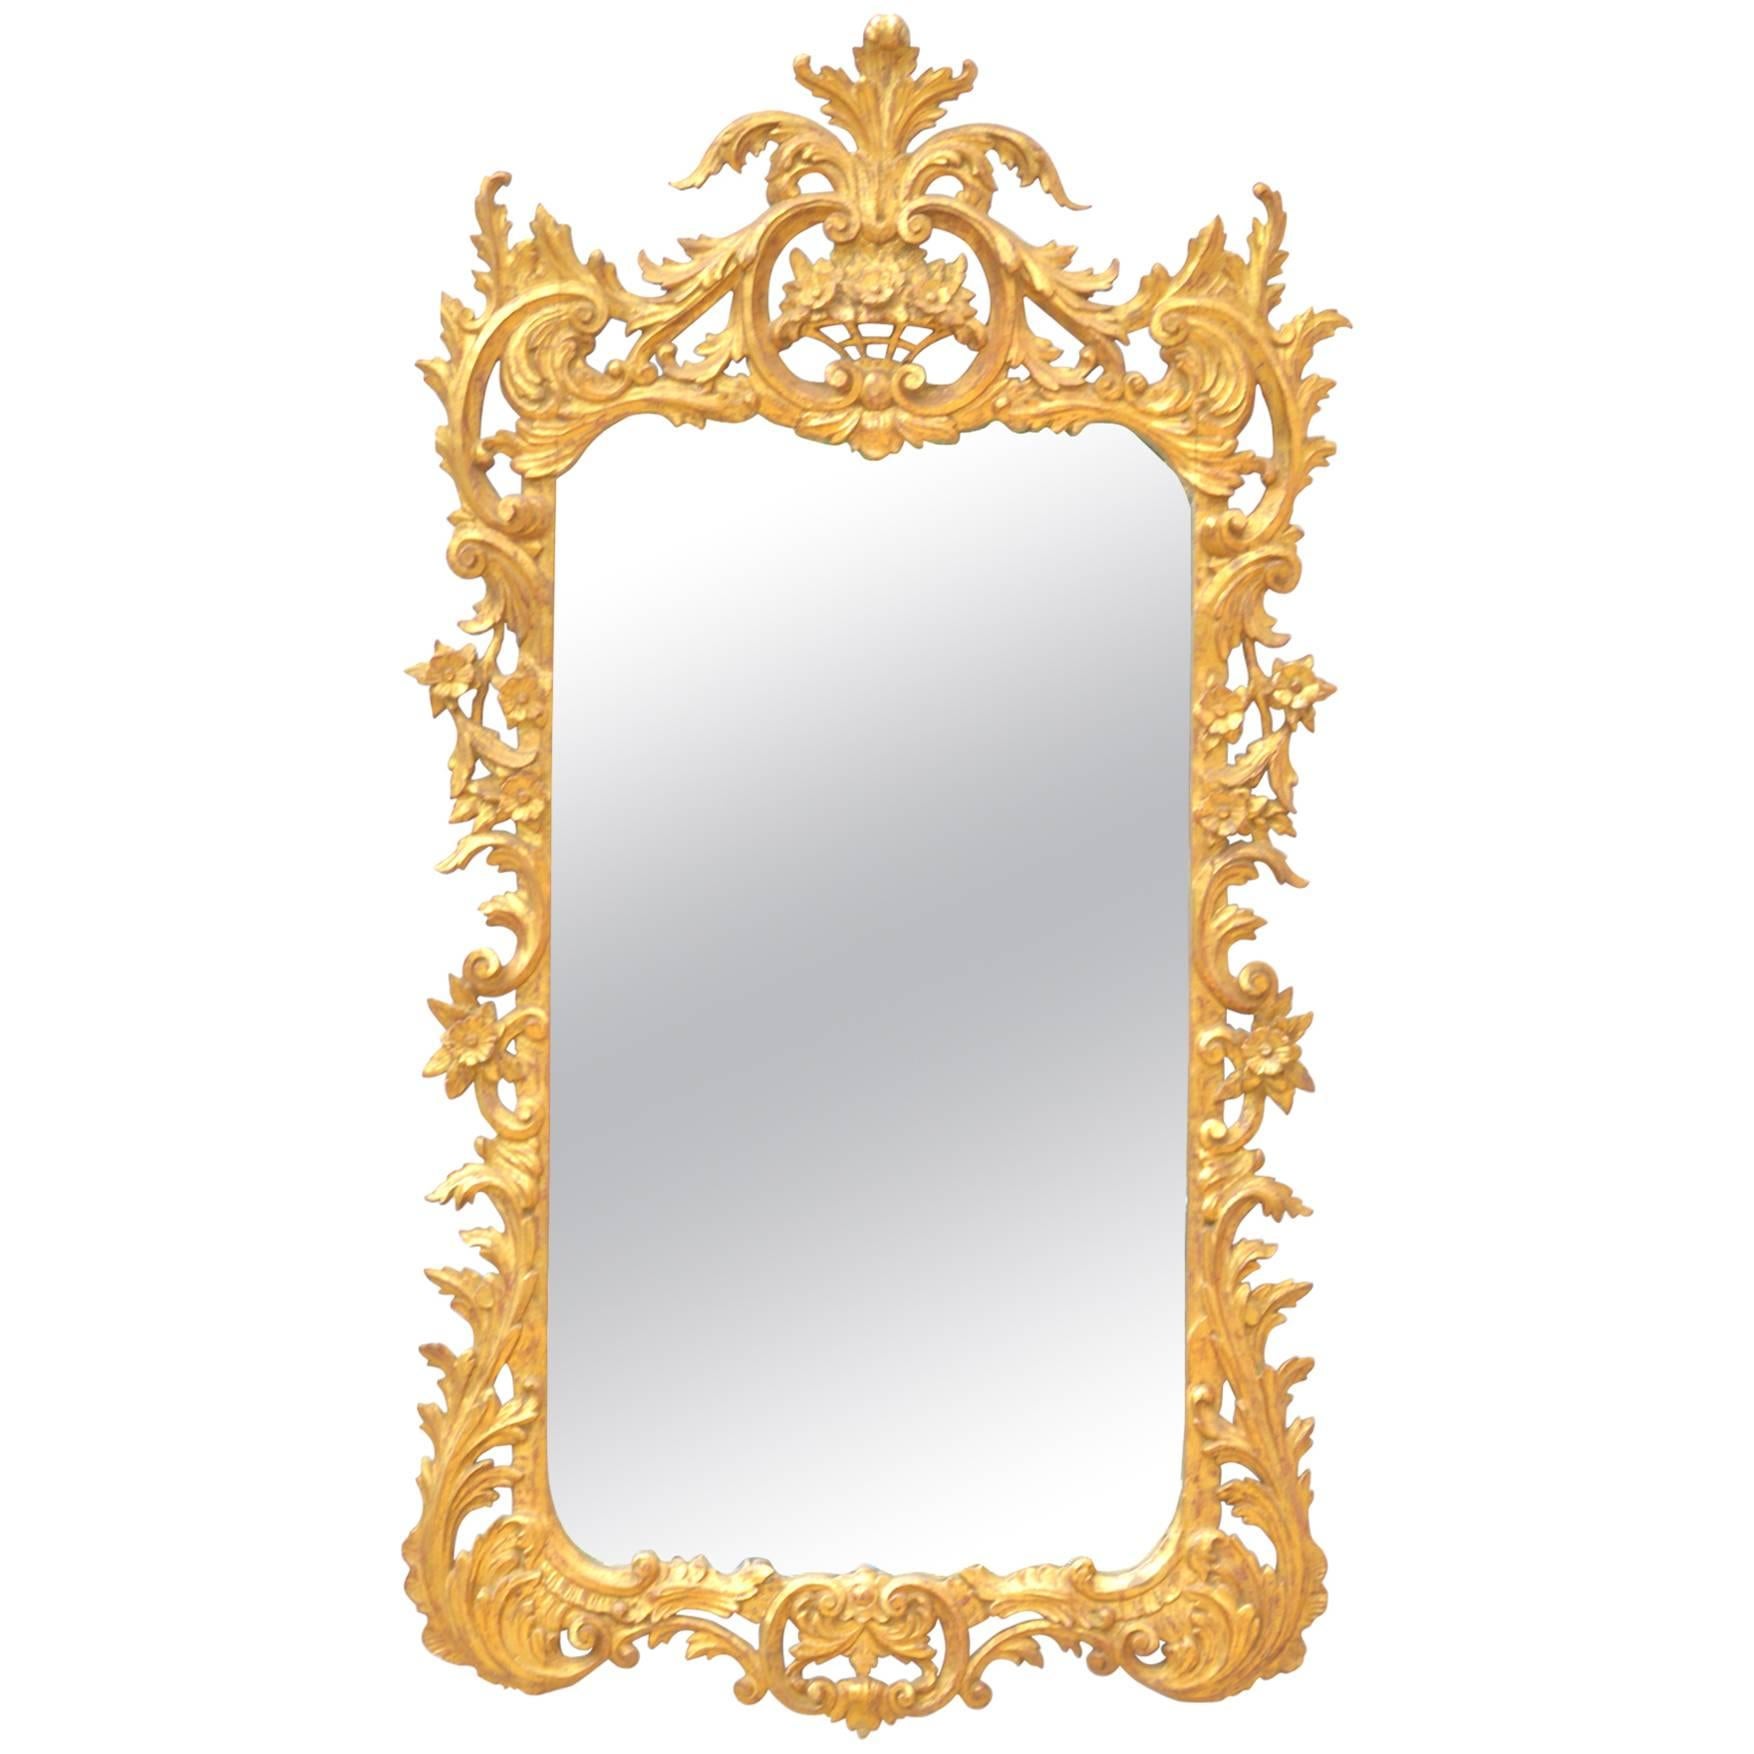 George II Rococo Styled Mirror